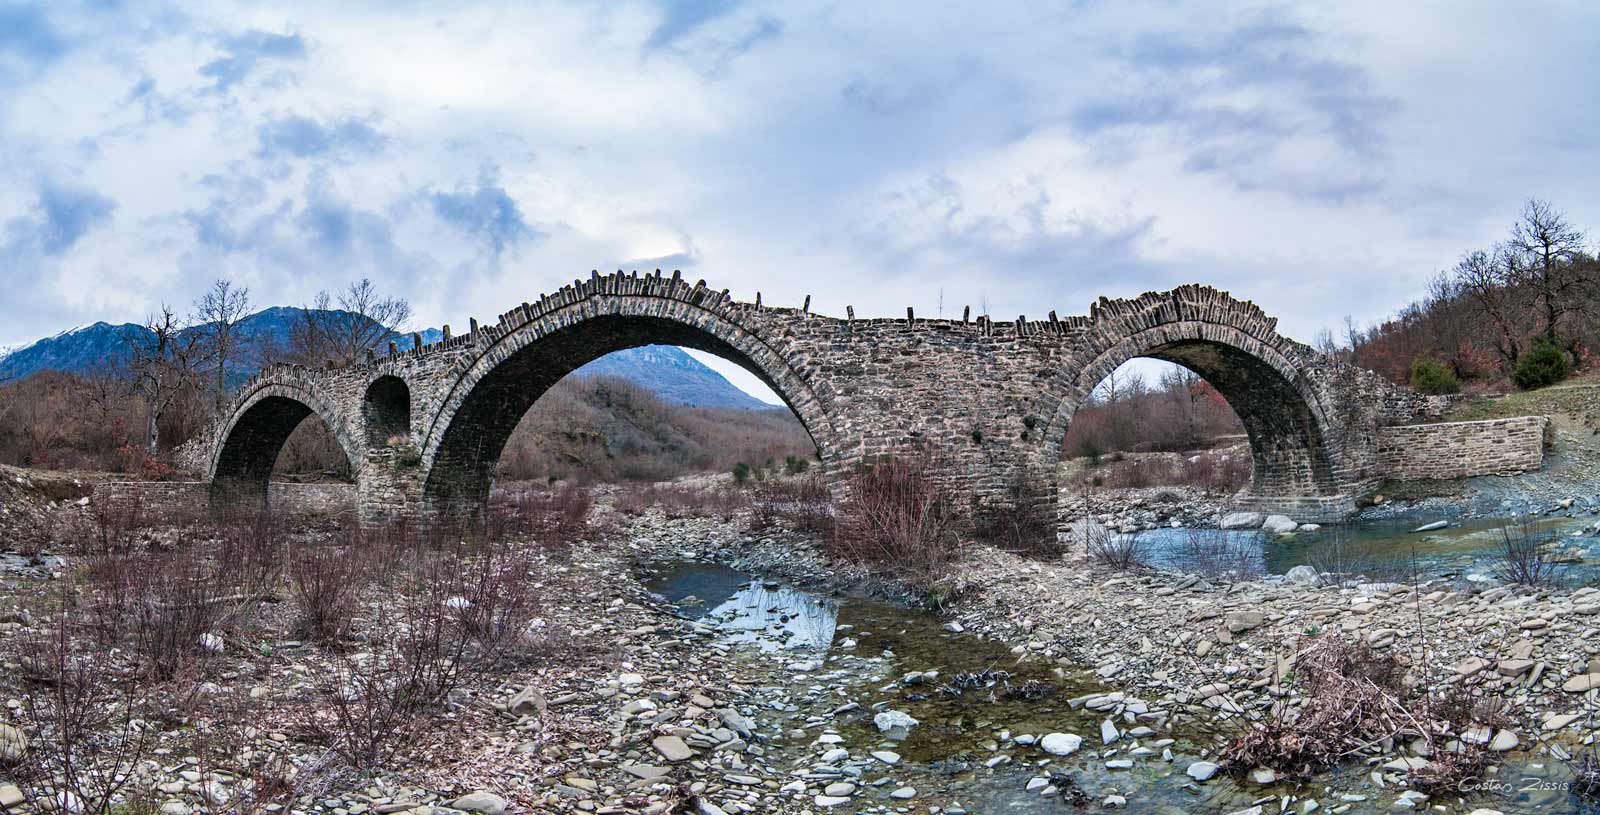 The Kaloutas Bridge